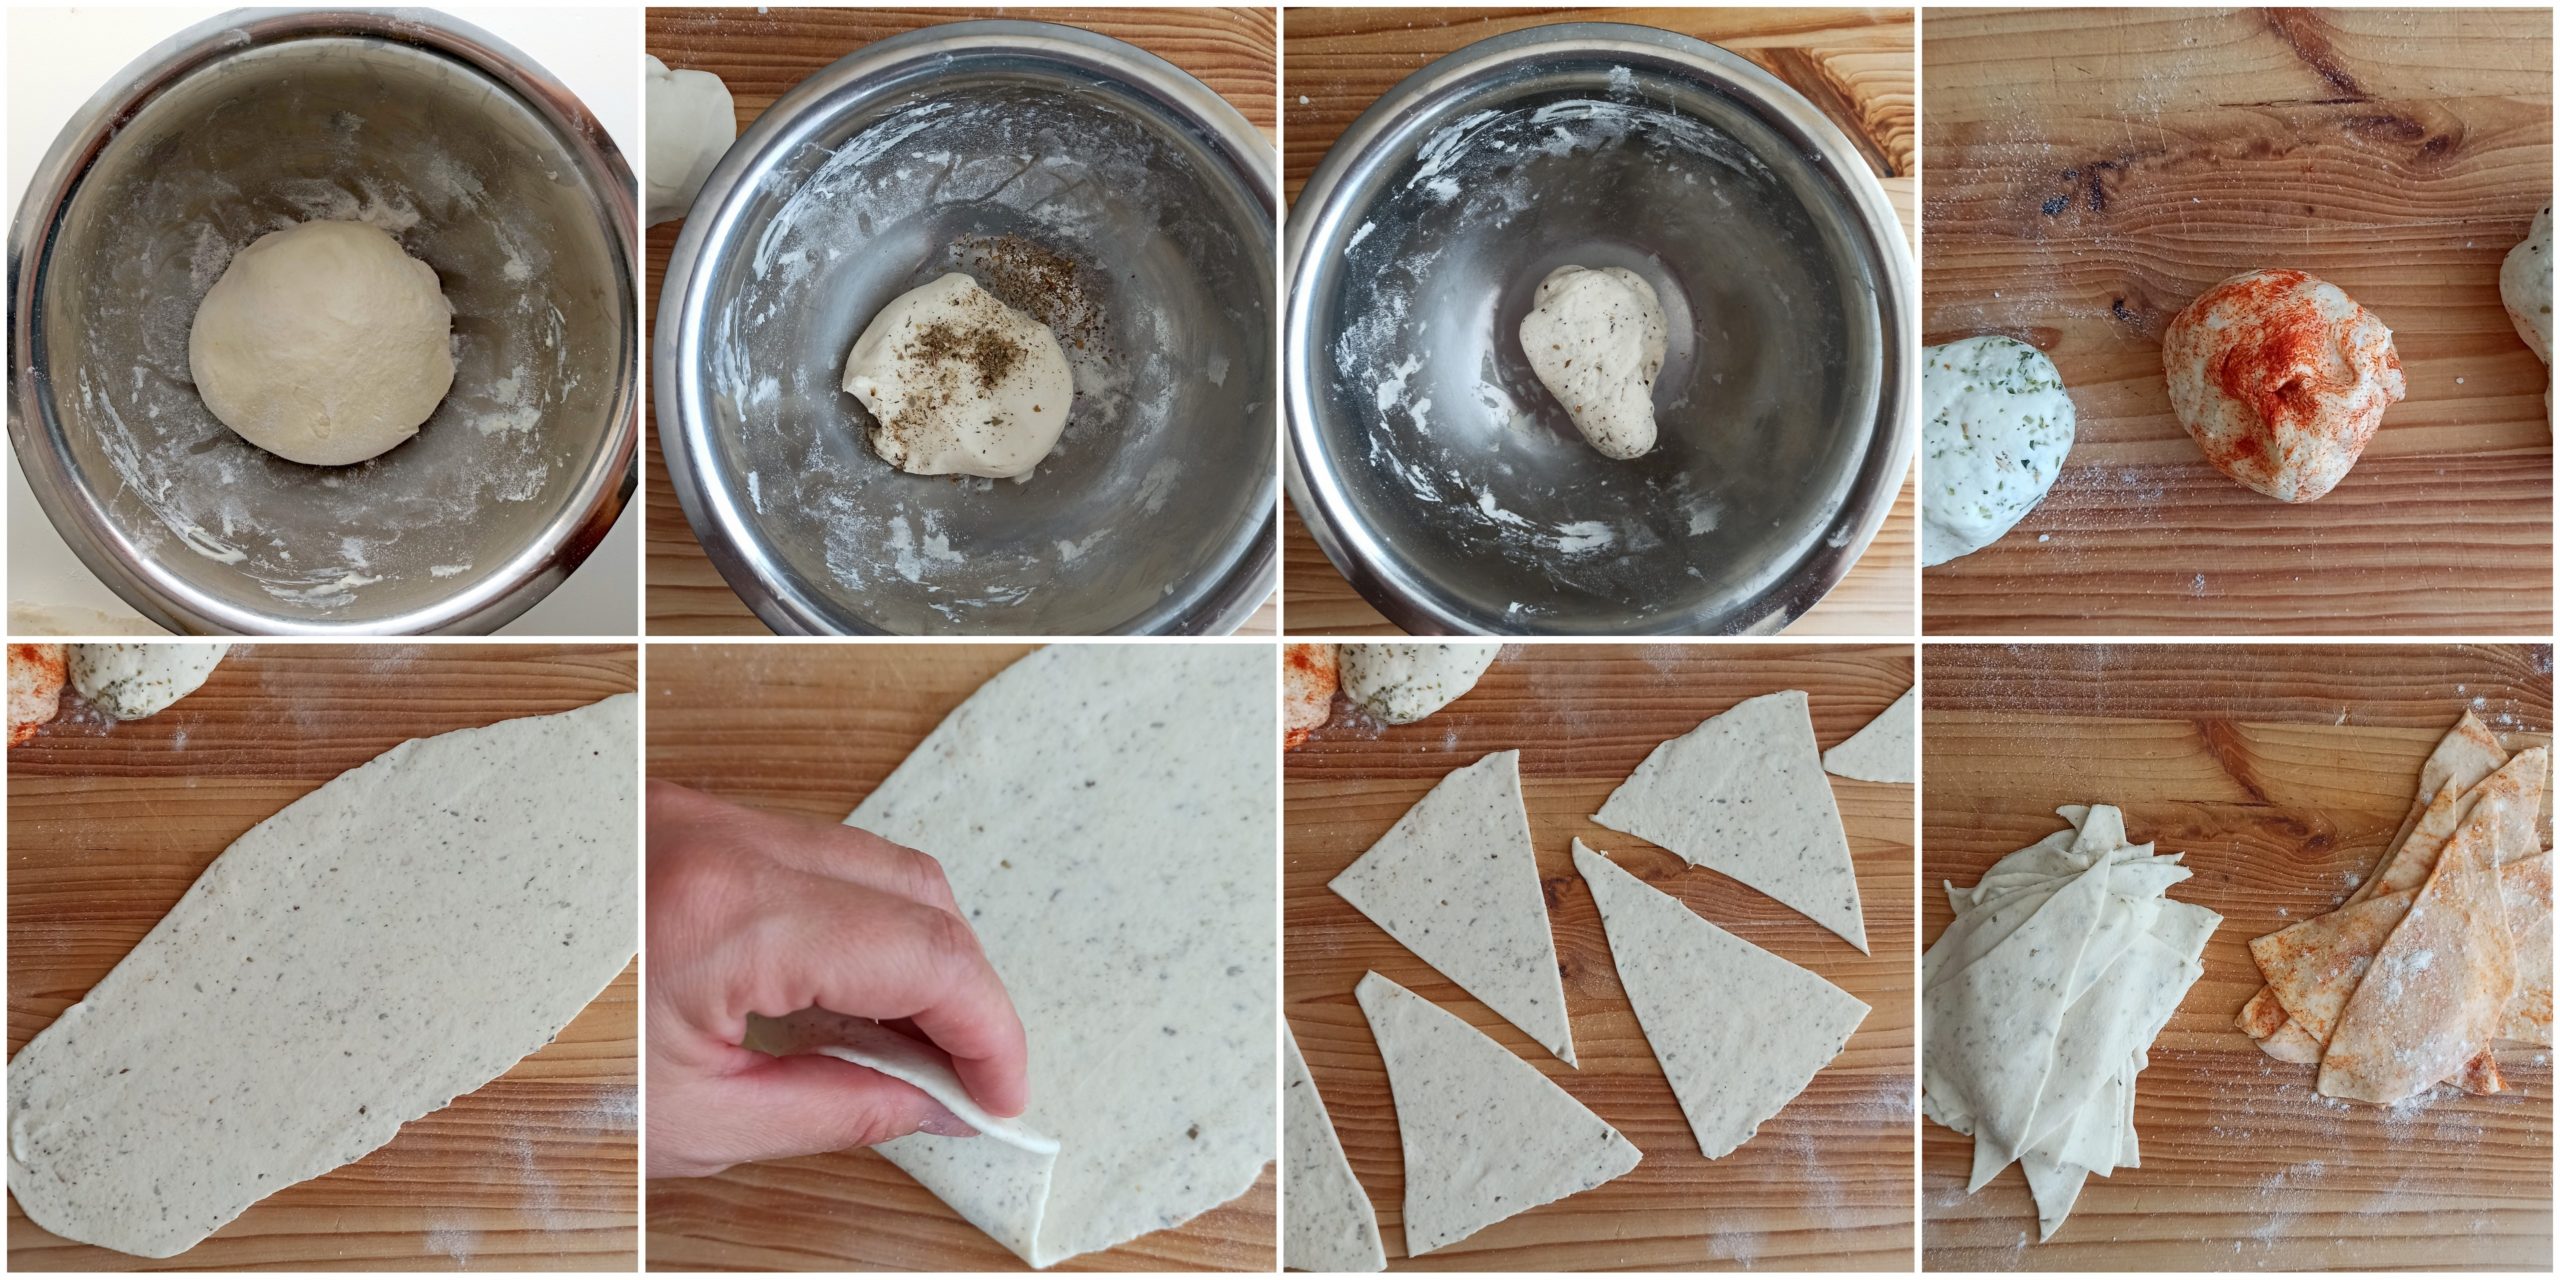 https://ricette.giallozafferano.it/Hummus.html